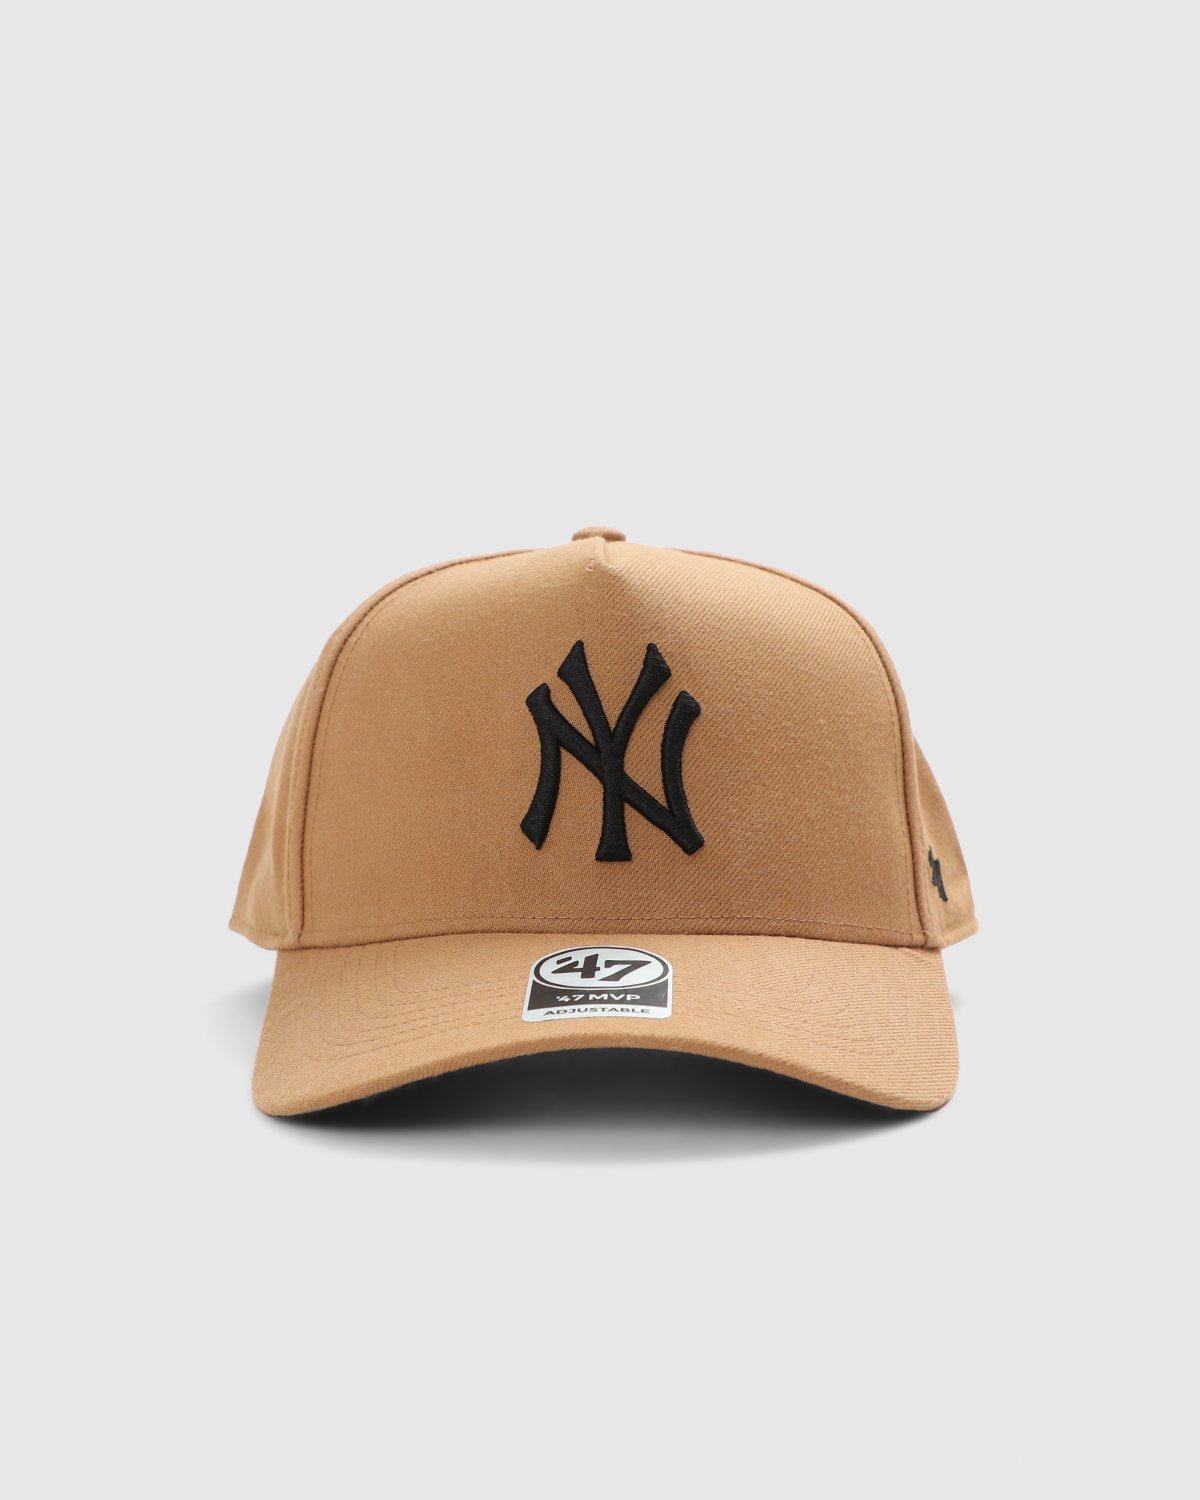 47 Brand Captain Snapback Cap - SURE SHOT New York Yankees Camel